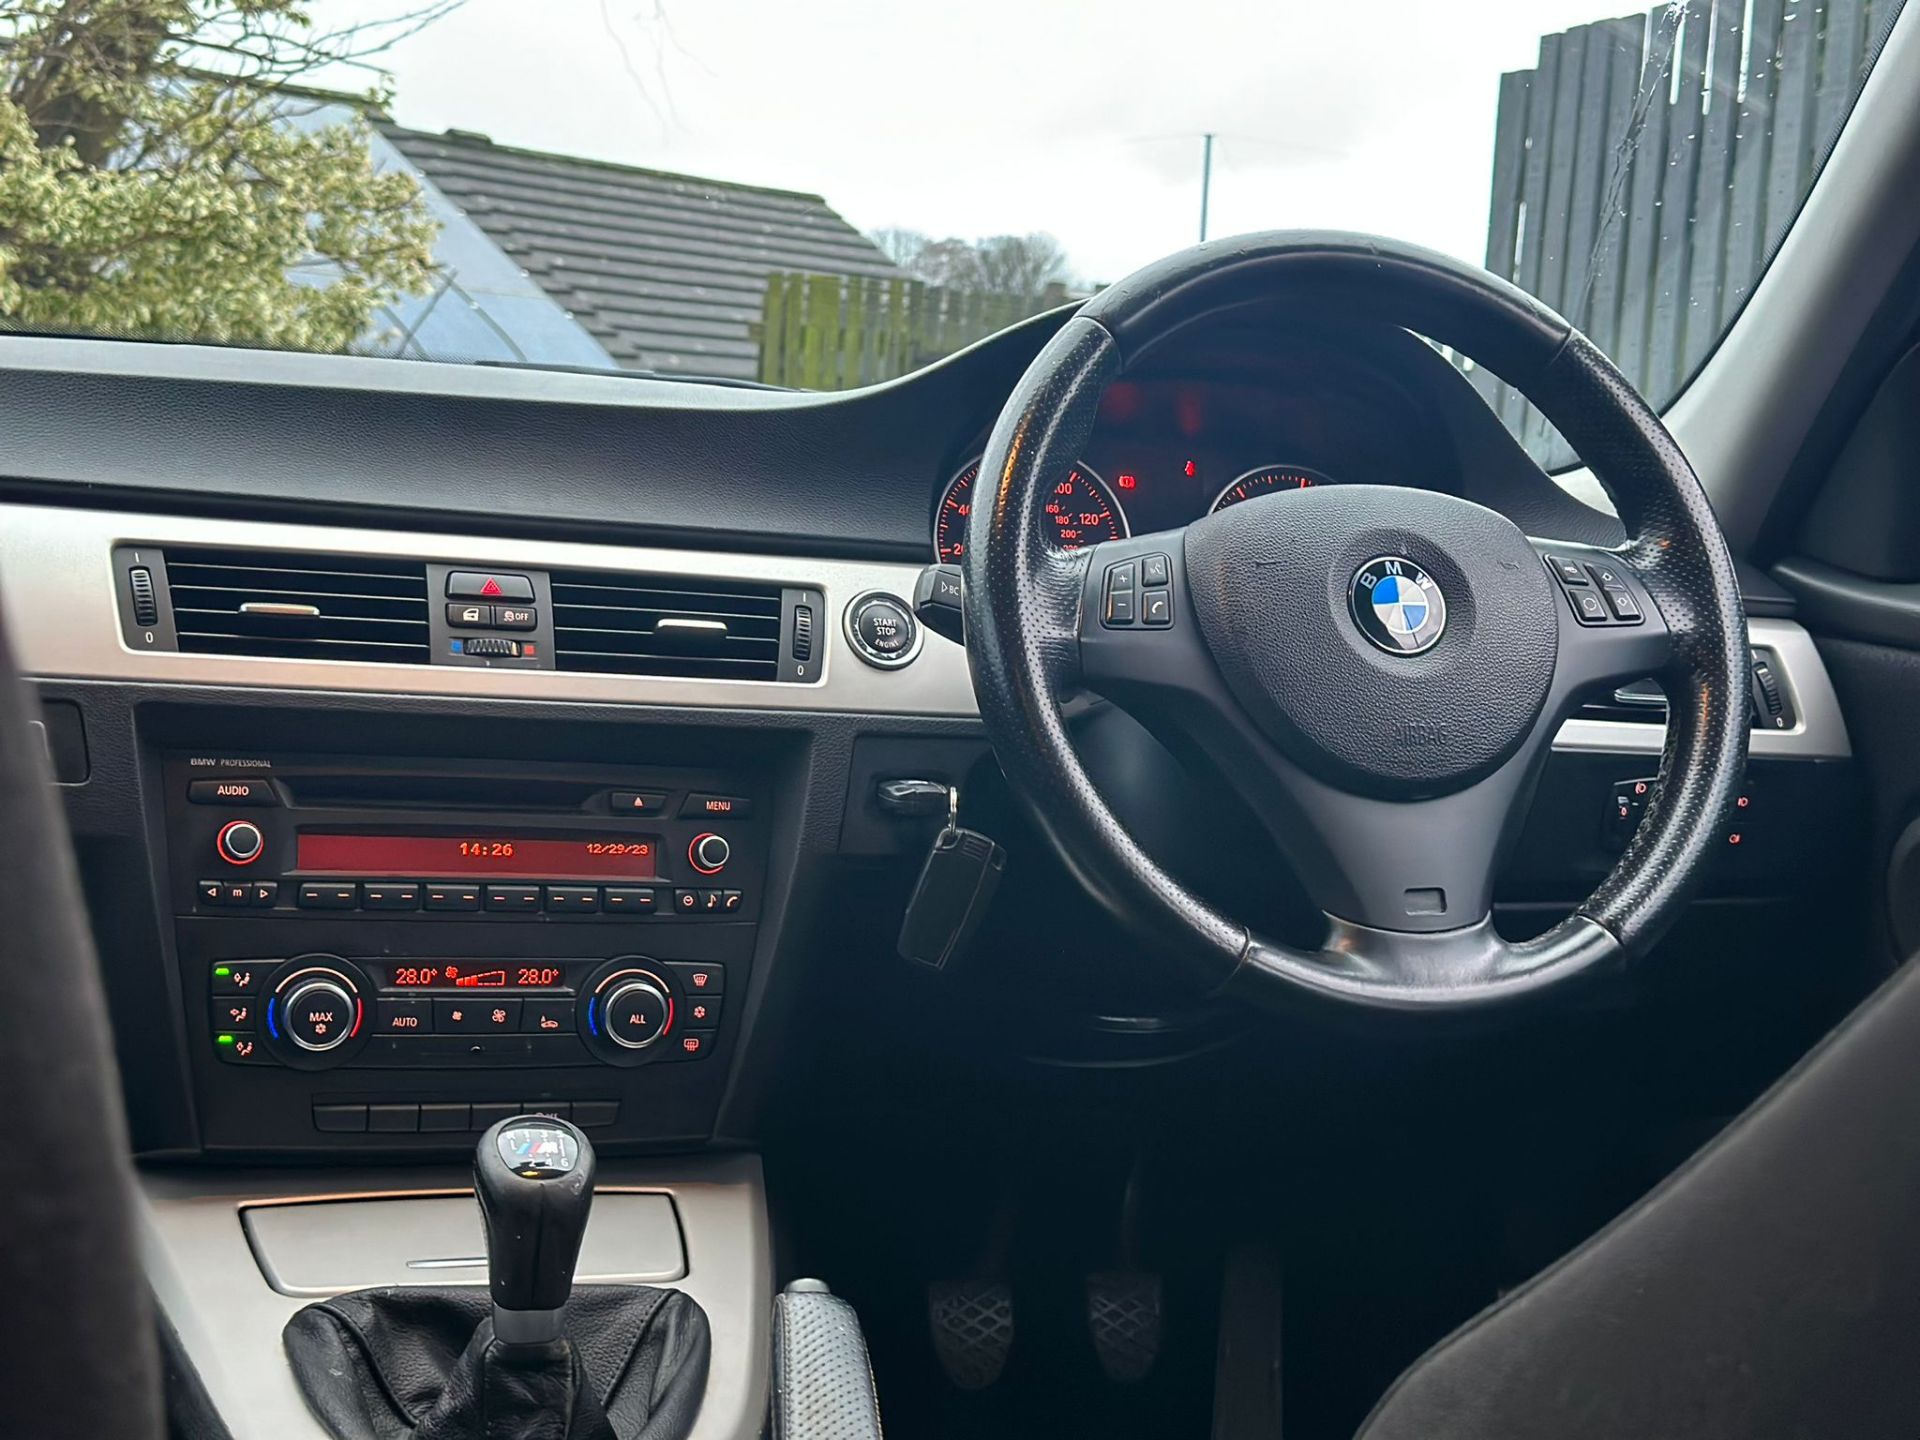 2011 BMW 318d Performance Edition 2.0 Diesel Manual 4 Door Saloon - Image 9 of 12